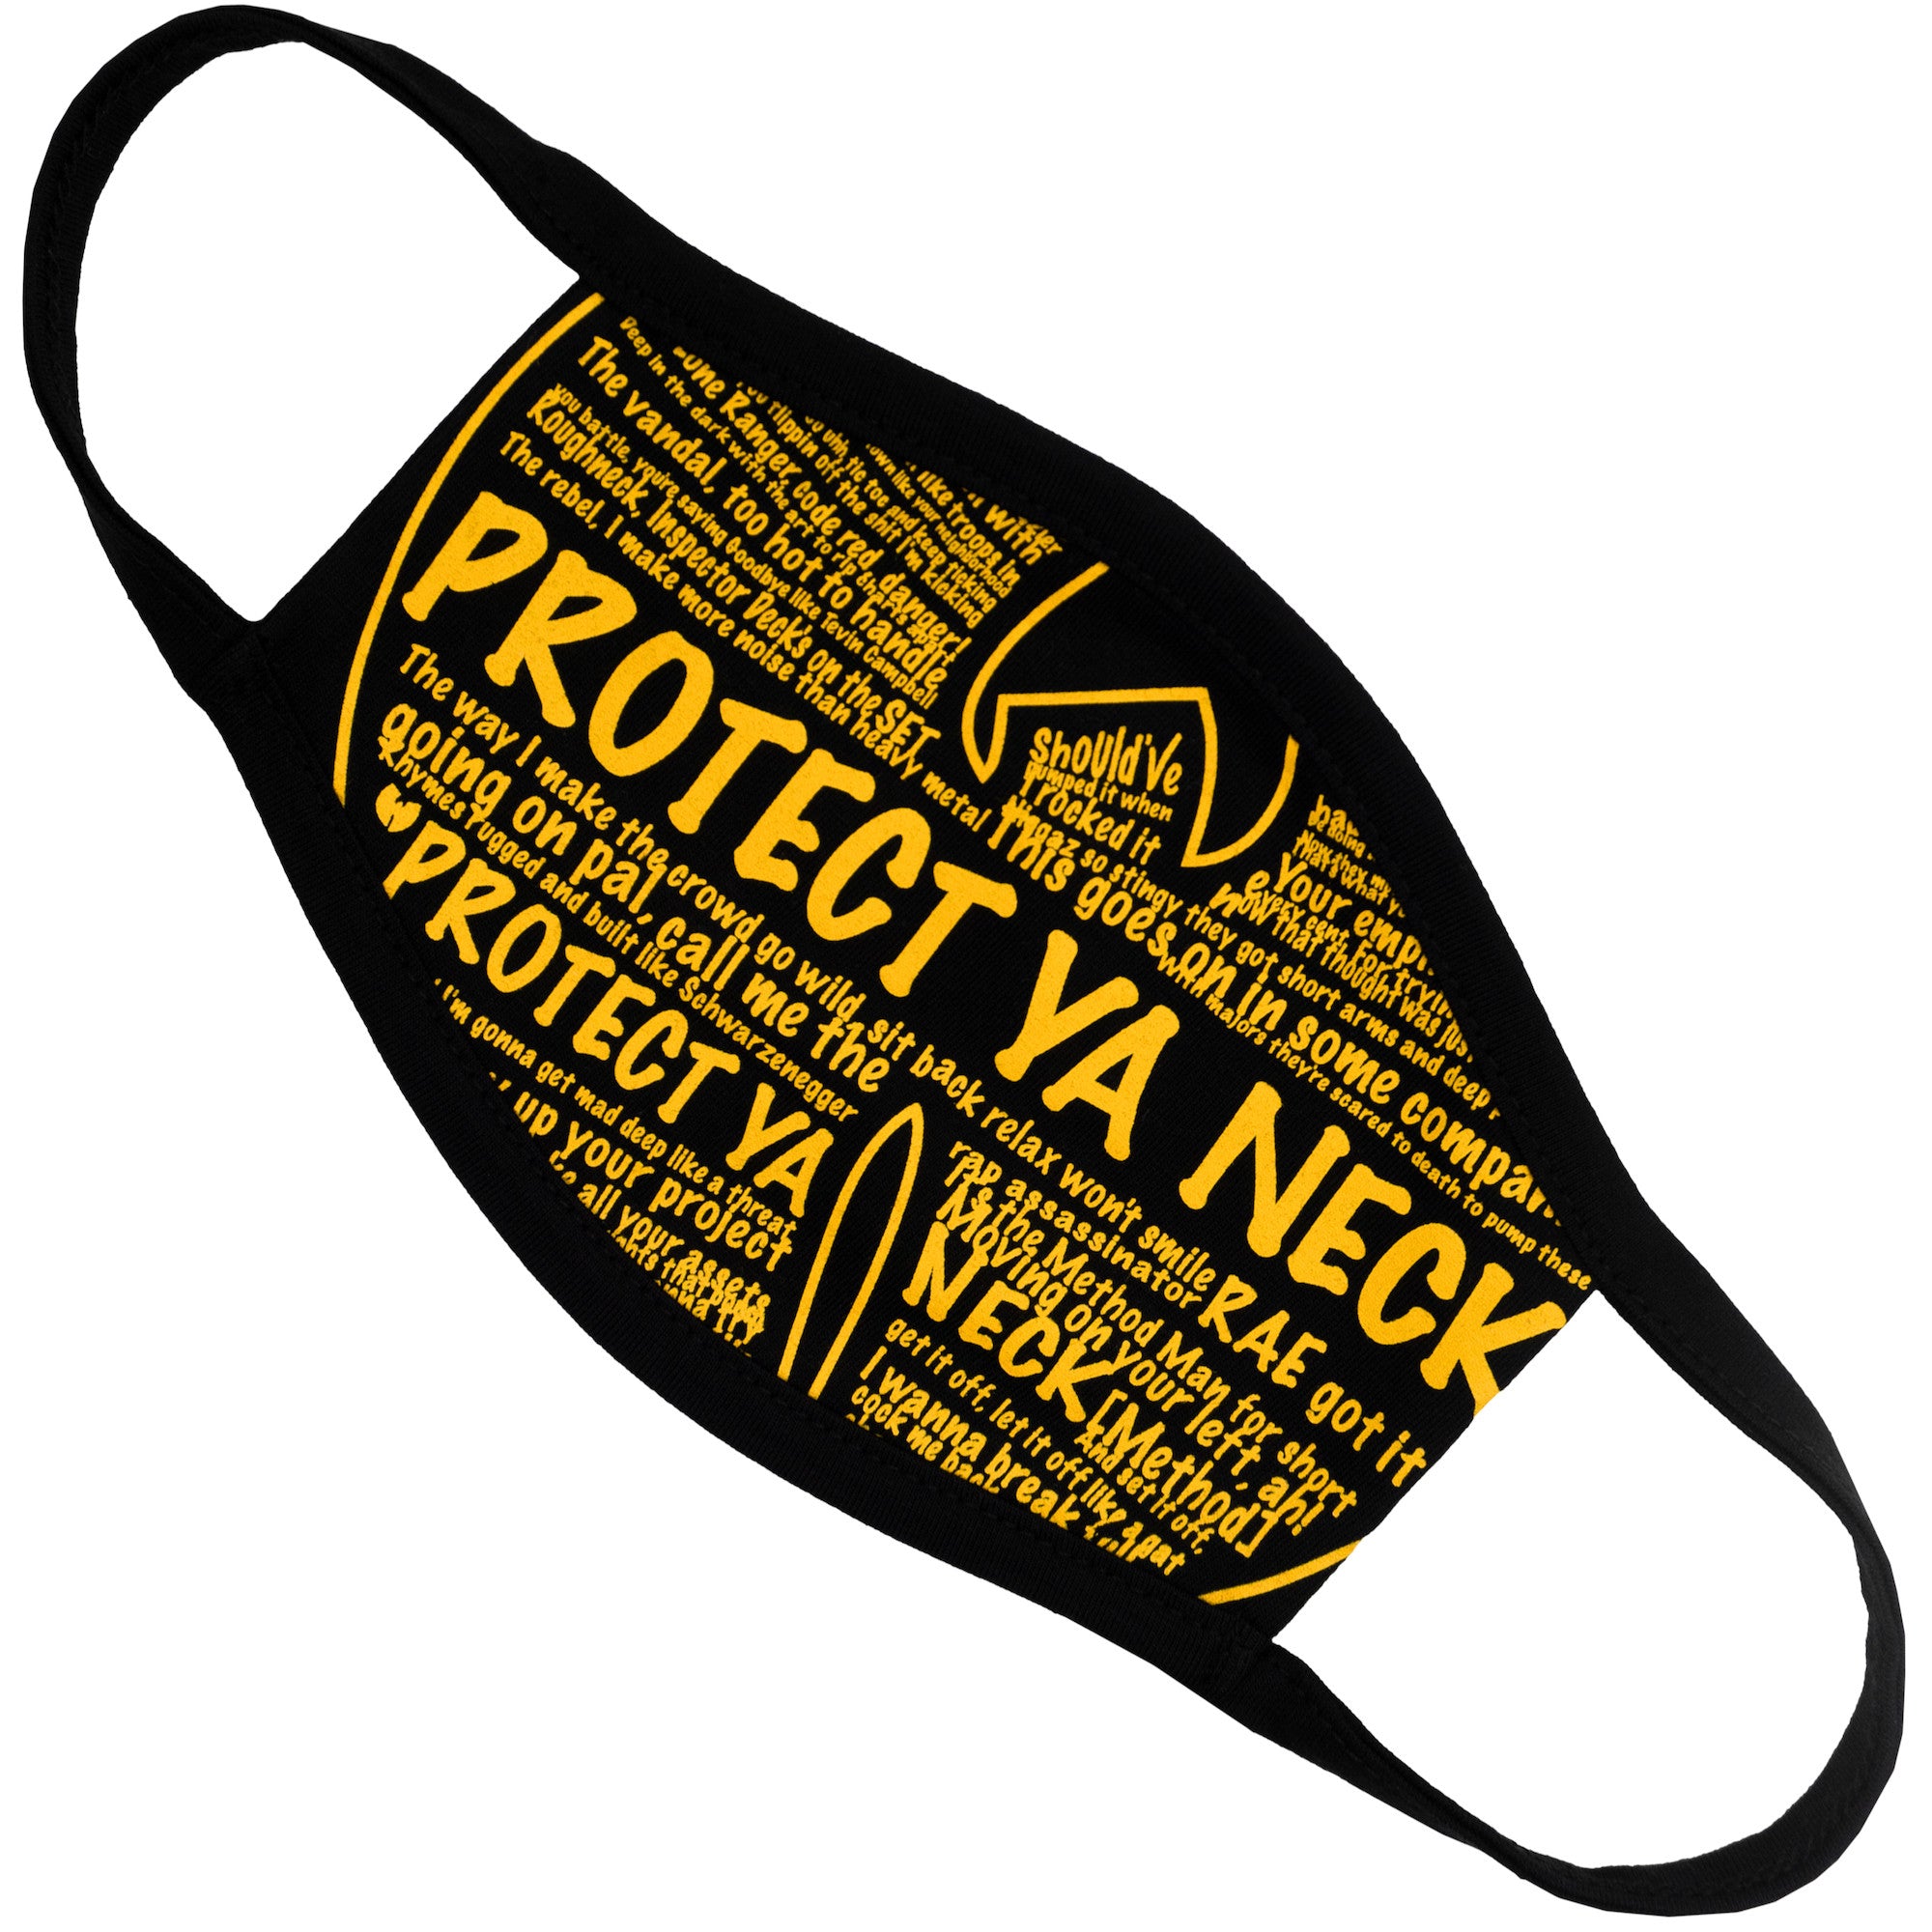 Wu Wear - Mundschutz PYN Protect Ya Neck Gesichtsmaske - Wu Tang Clan